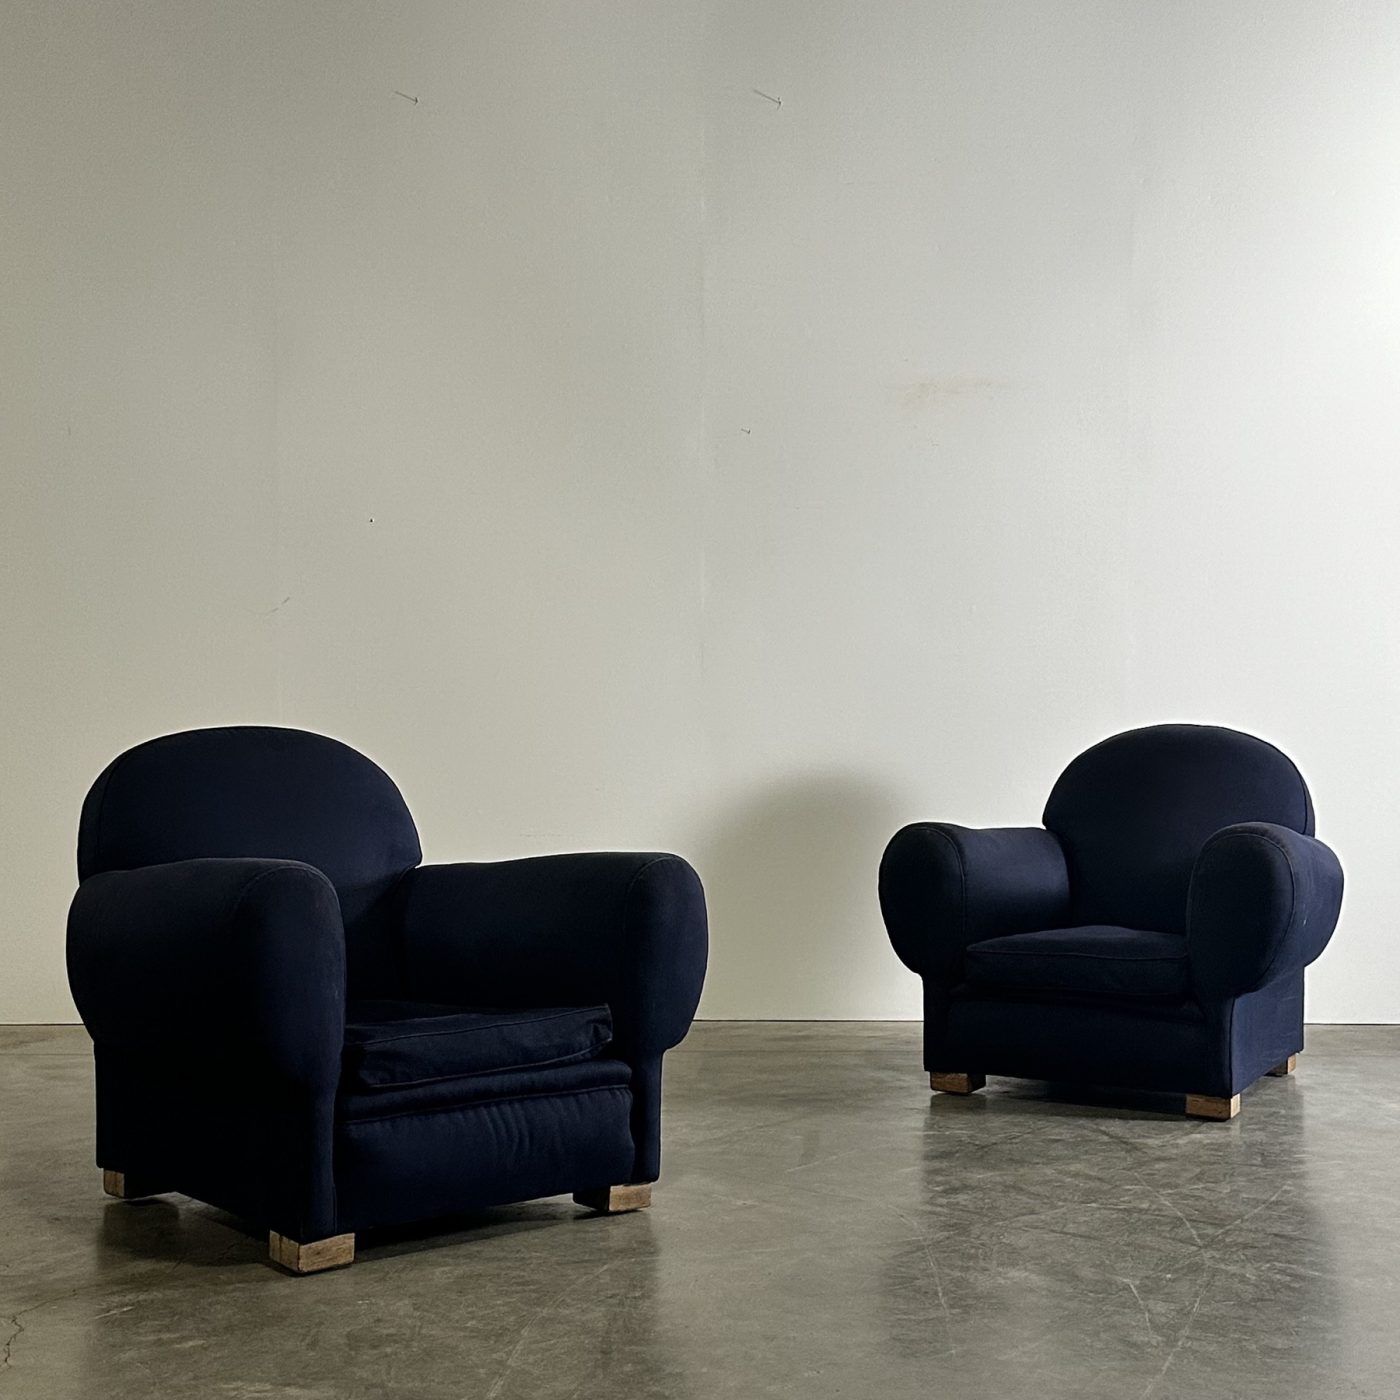 objet-vagabond-club-chairs0001